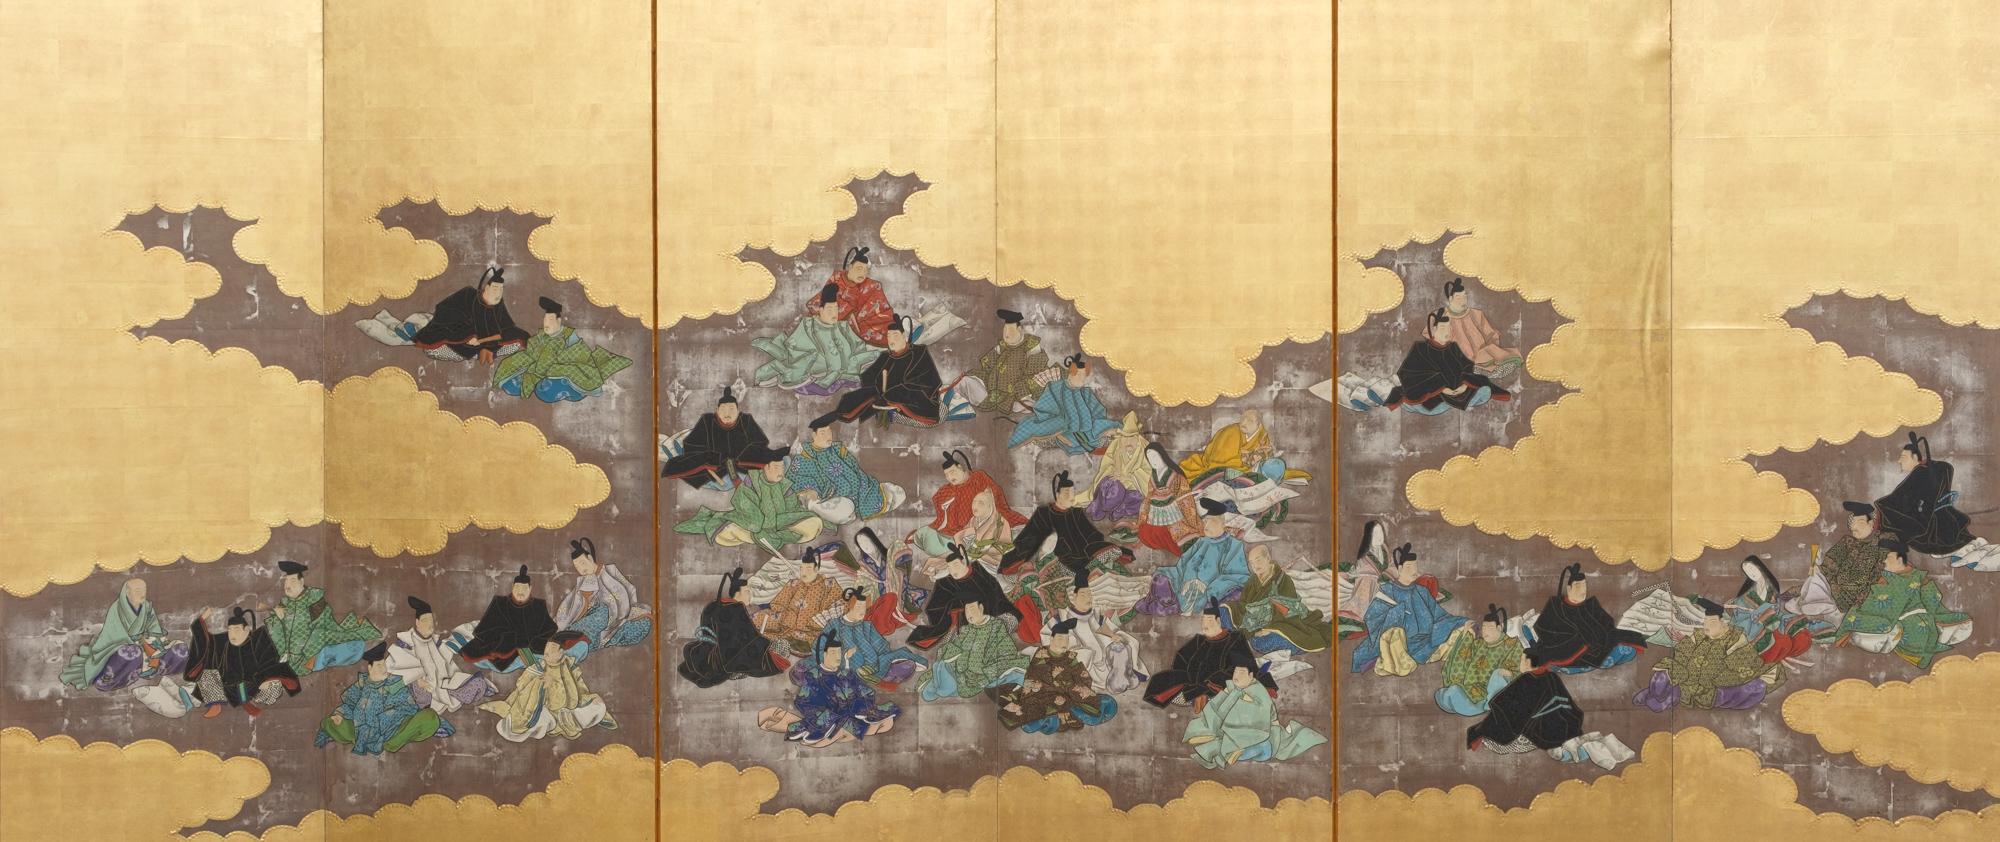 Pair of Japanese folding screens (byôbu) of poets from ‘Hyakunin isshu’ 百人一首 7